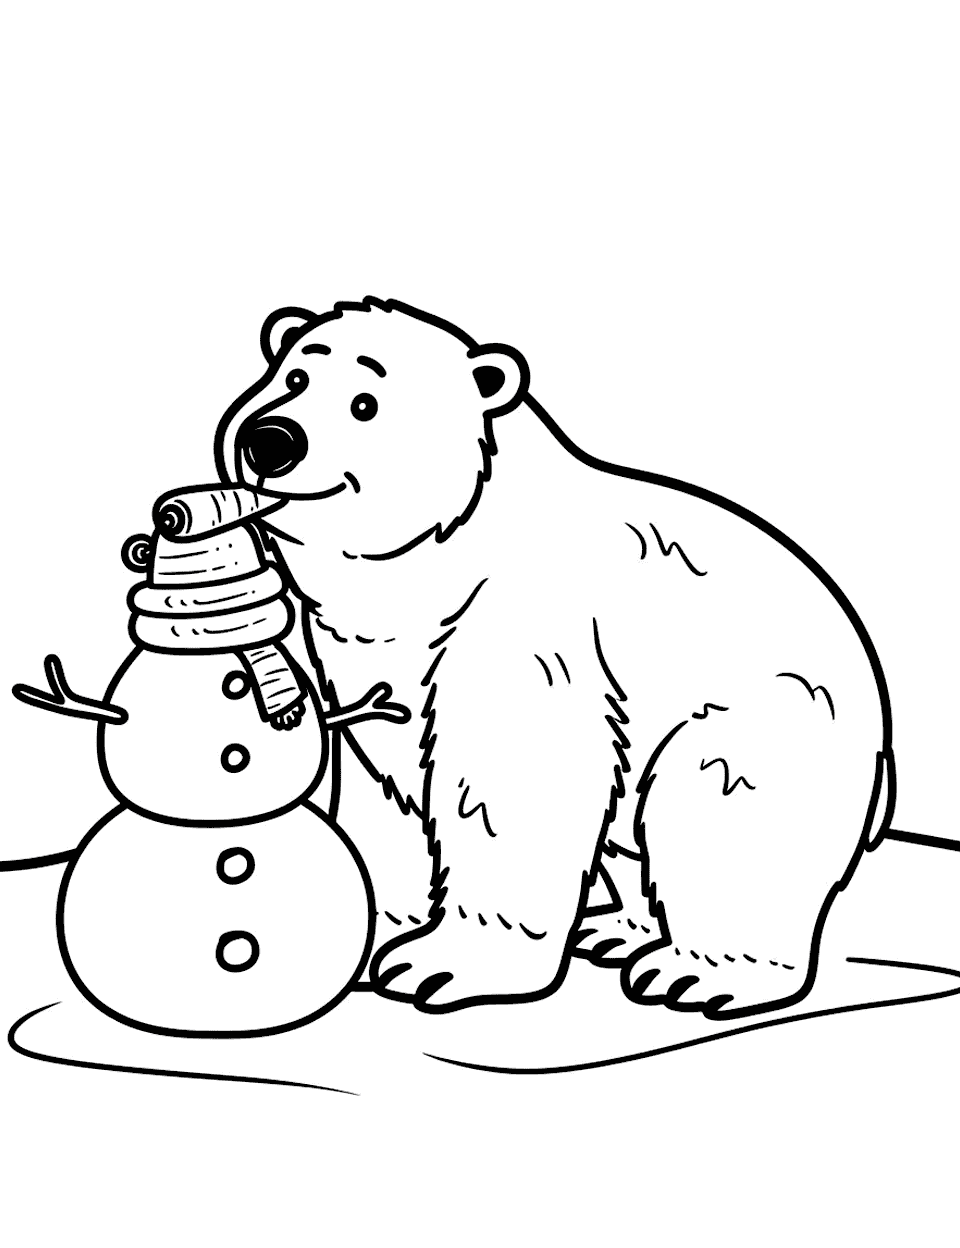 Polar Bear and Snowman Coloring Page - A polar bear building a snowman with a carrot nose.